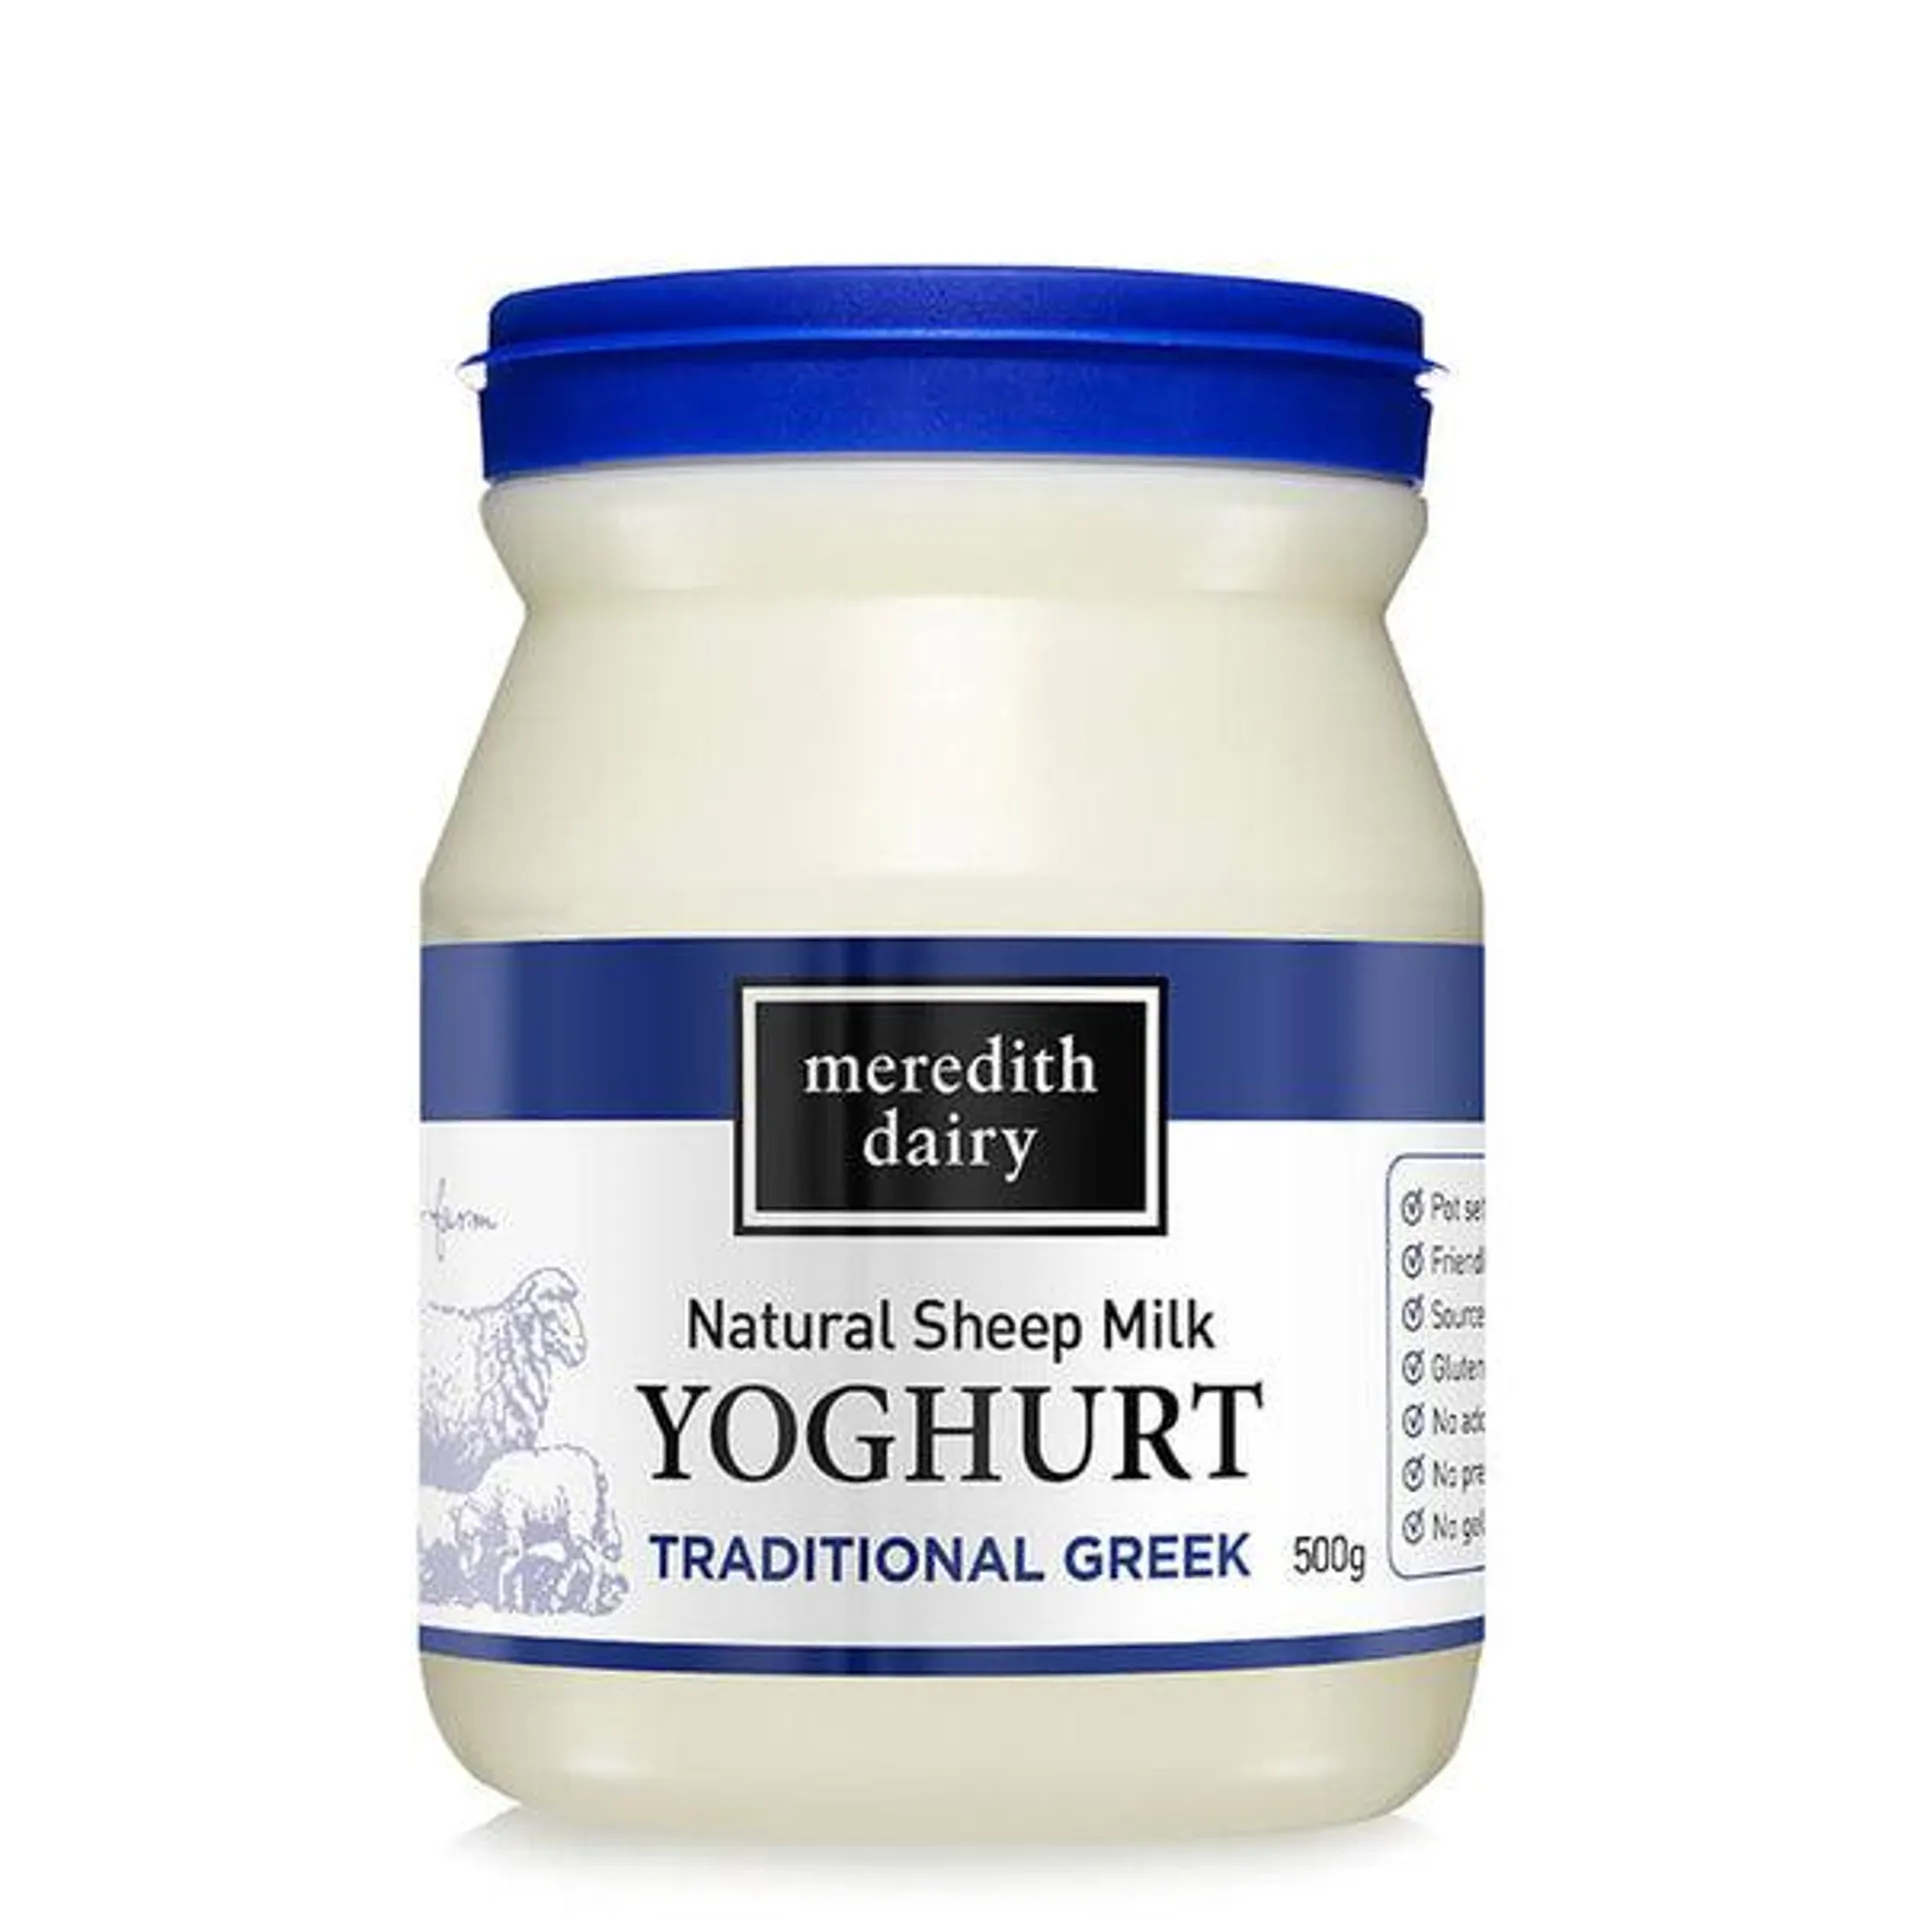 Meredith Dairy Natural Sheep Milk Yoghurt Traditional Greek Yoghurt 500g